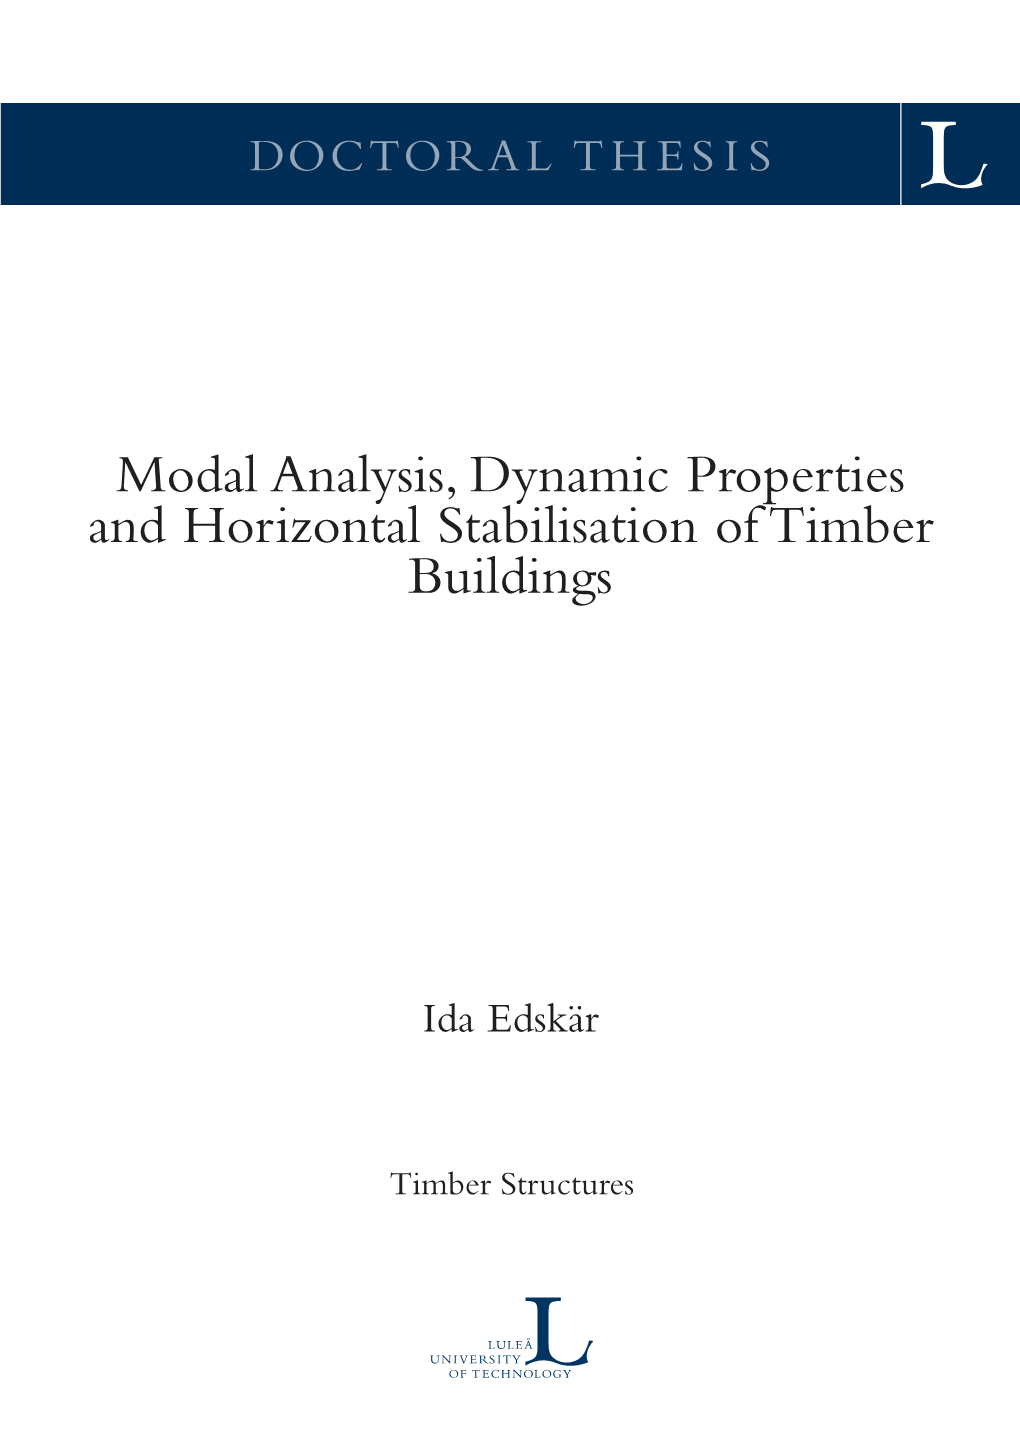 Modal Analysis, Dynamic Properties and Horizontal Stabilisation